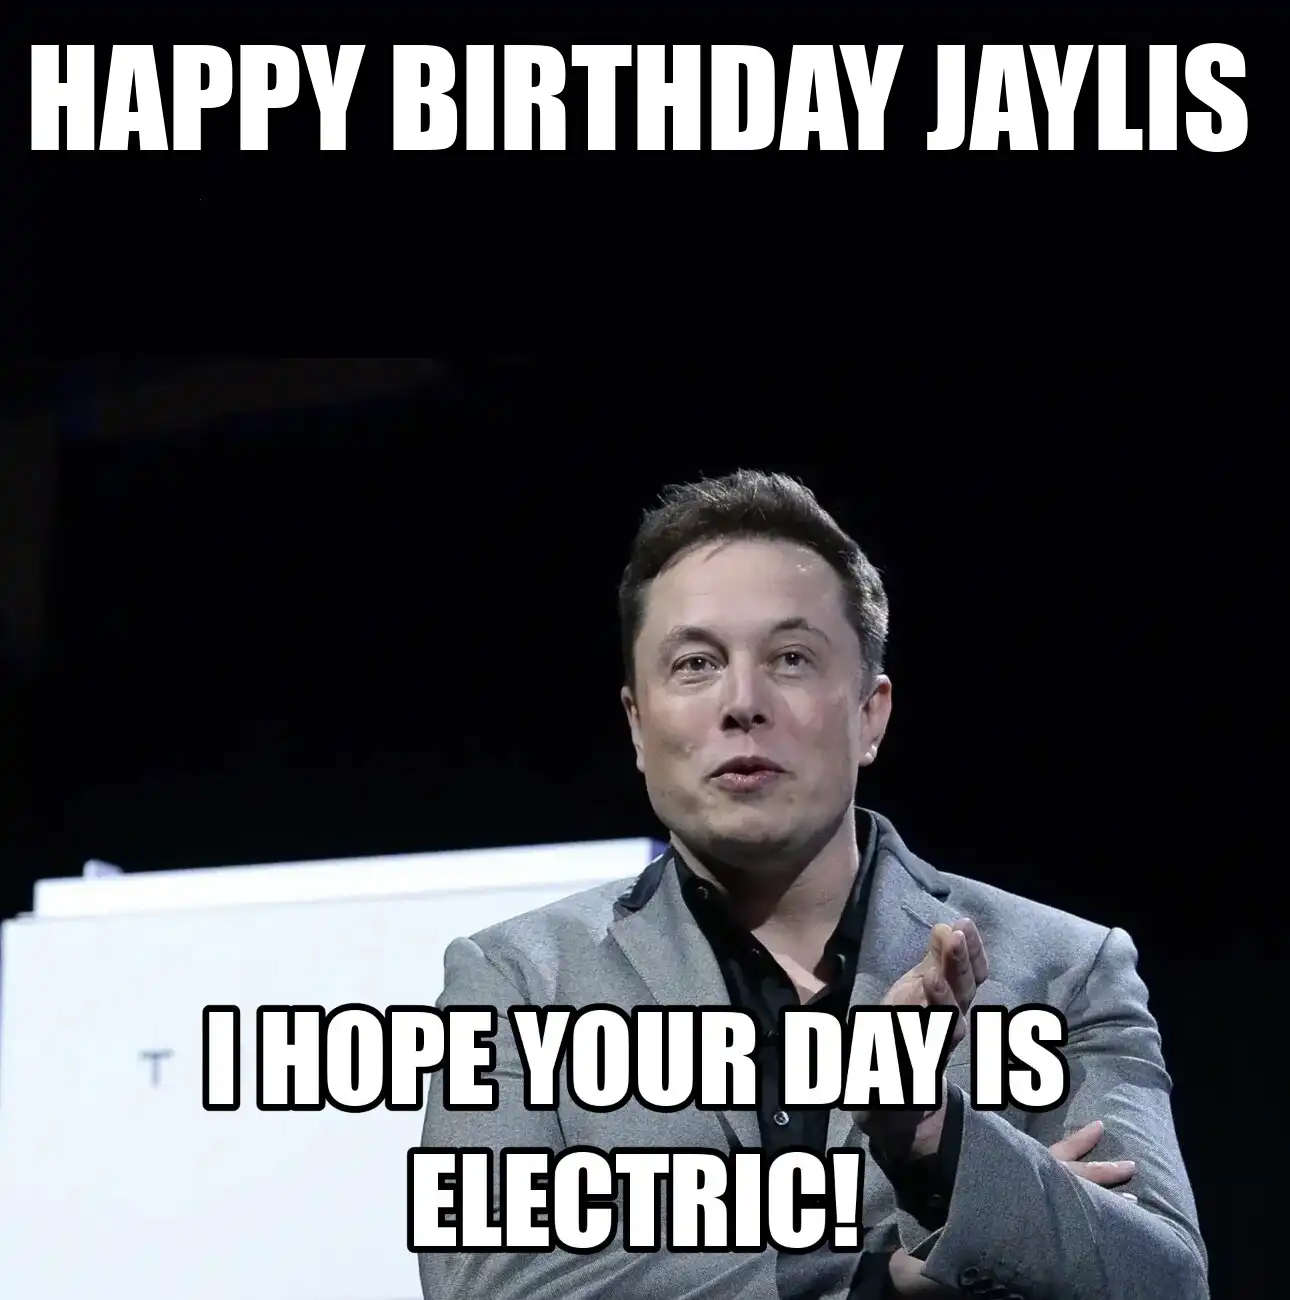 Happy Birthday Jaylis I Hope Your Day Is Electric Meme